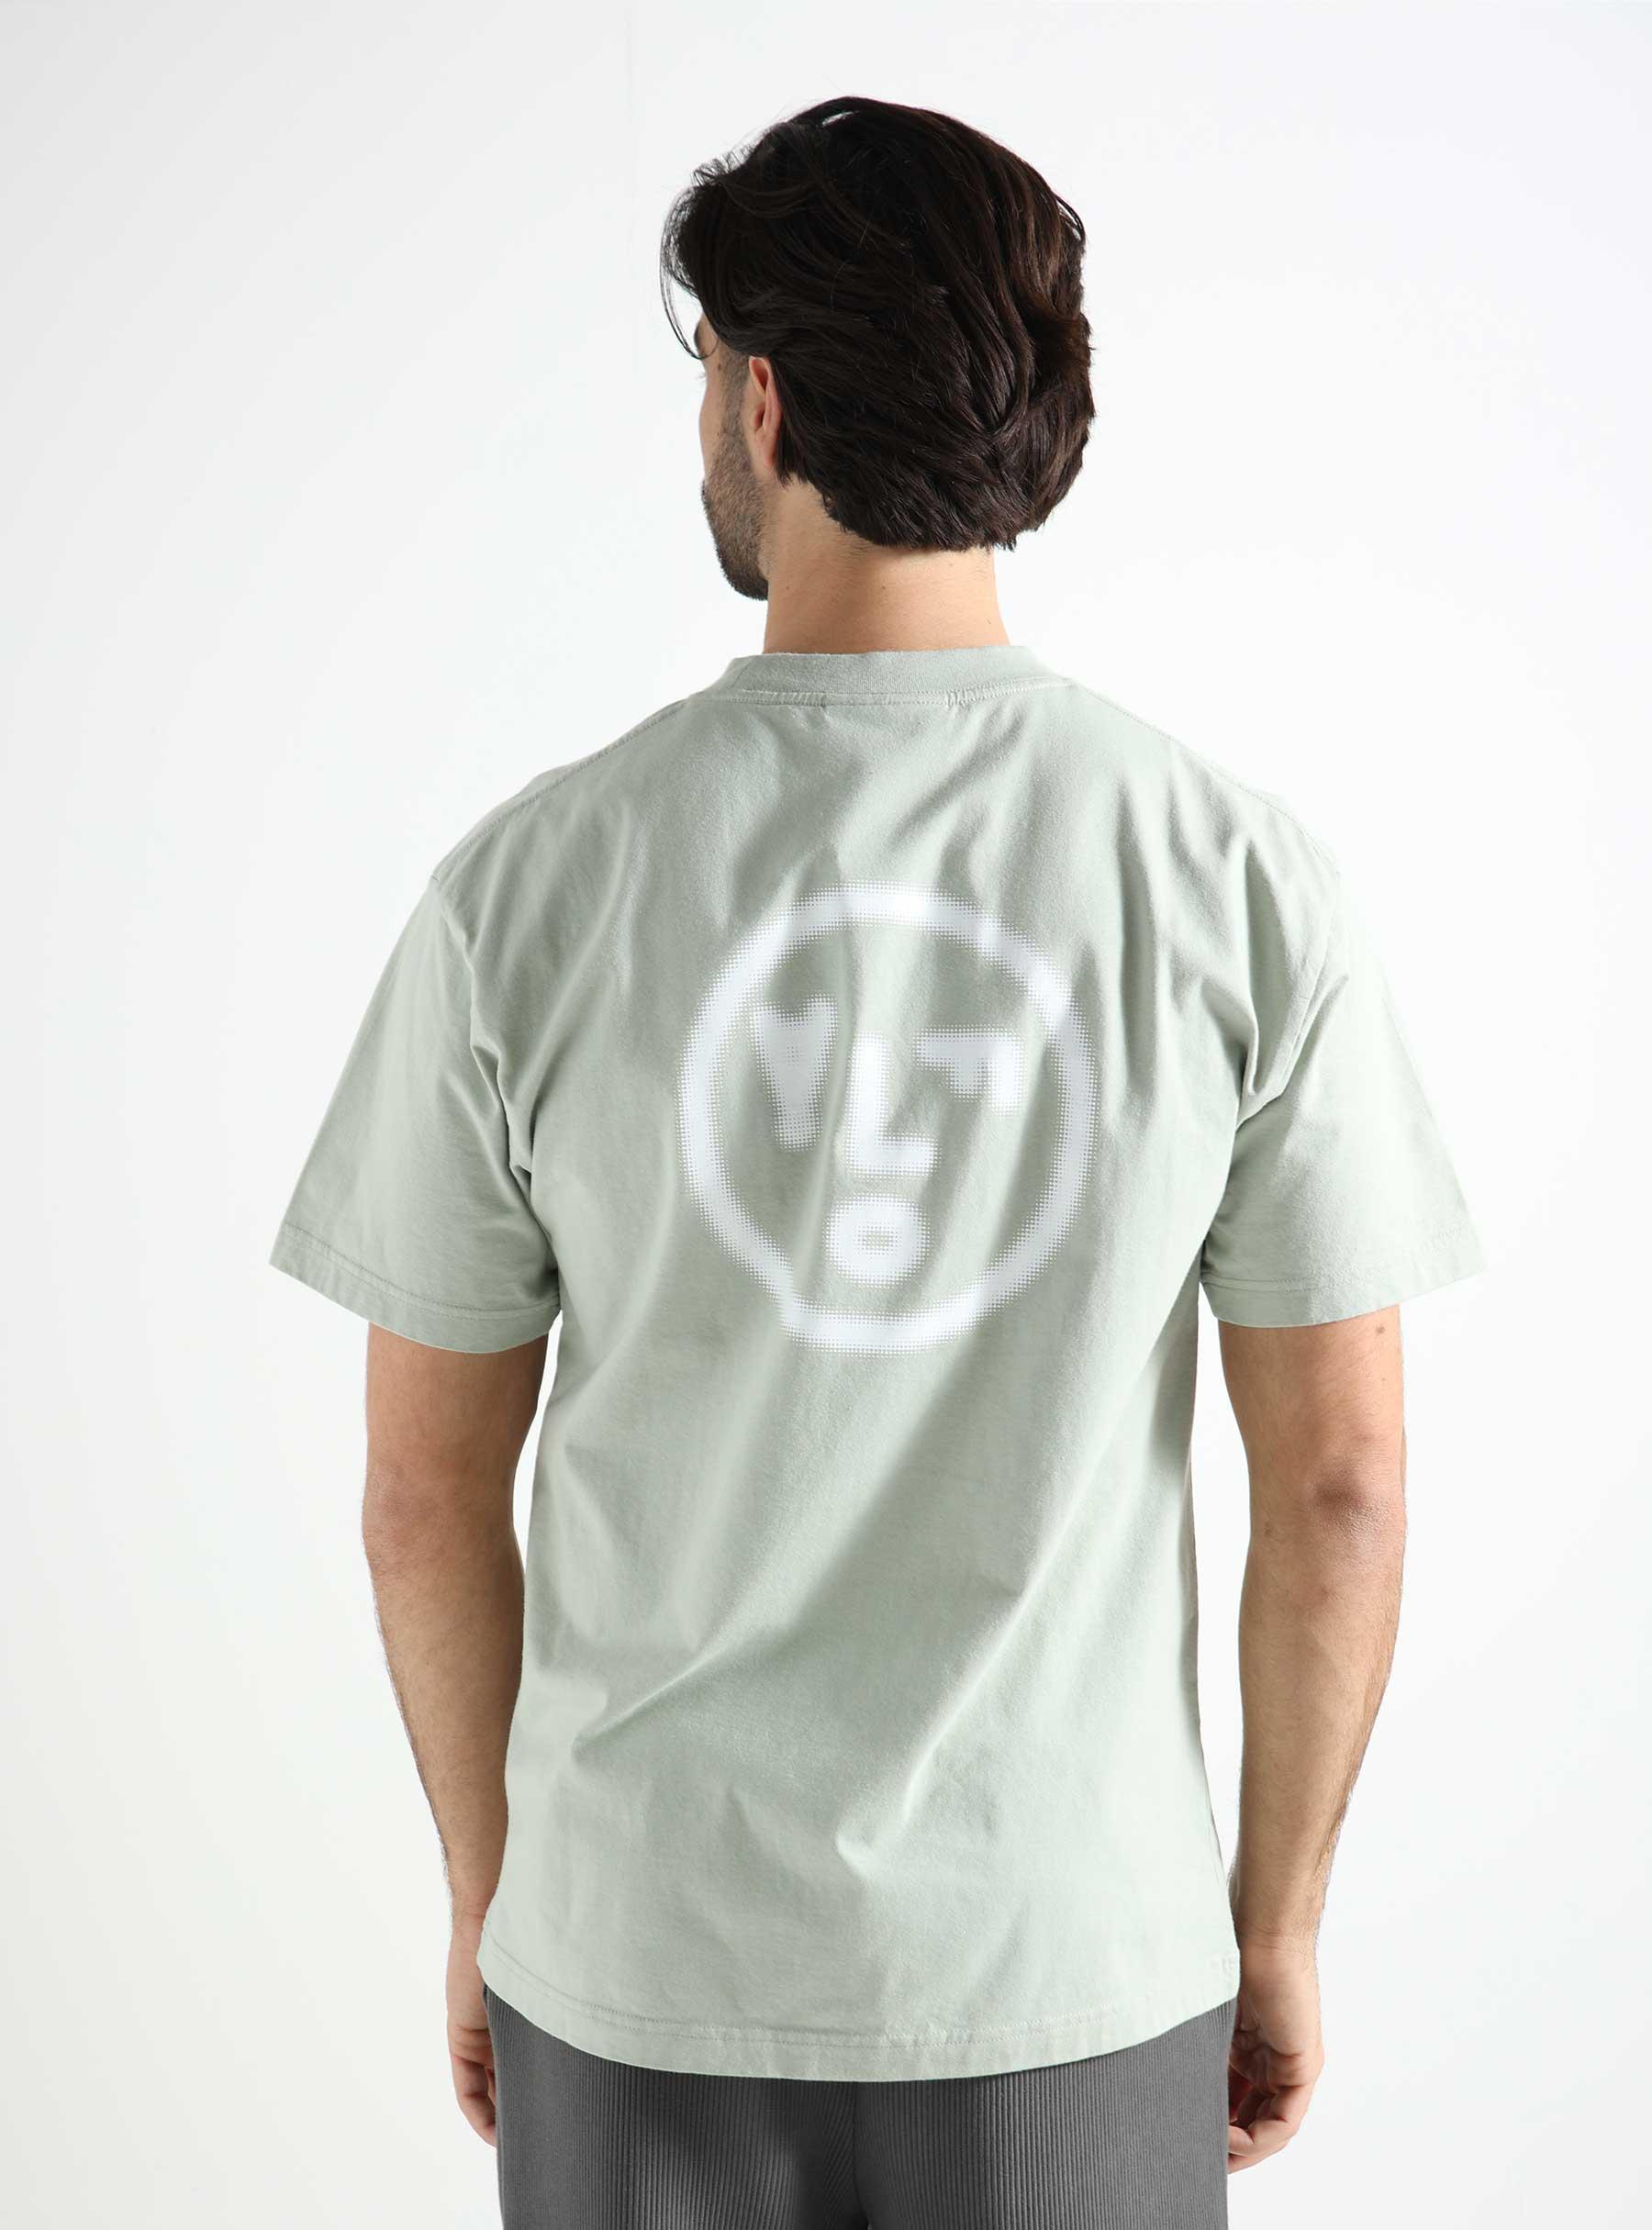 Pixelated Face T-shirt Pale Green M160101